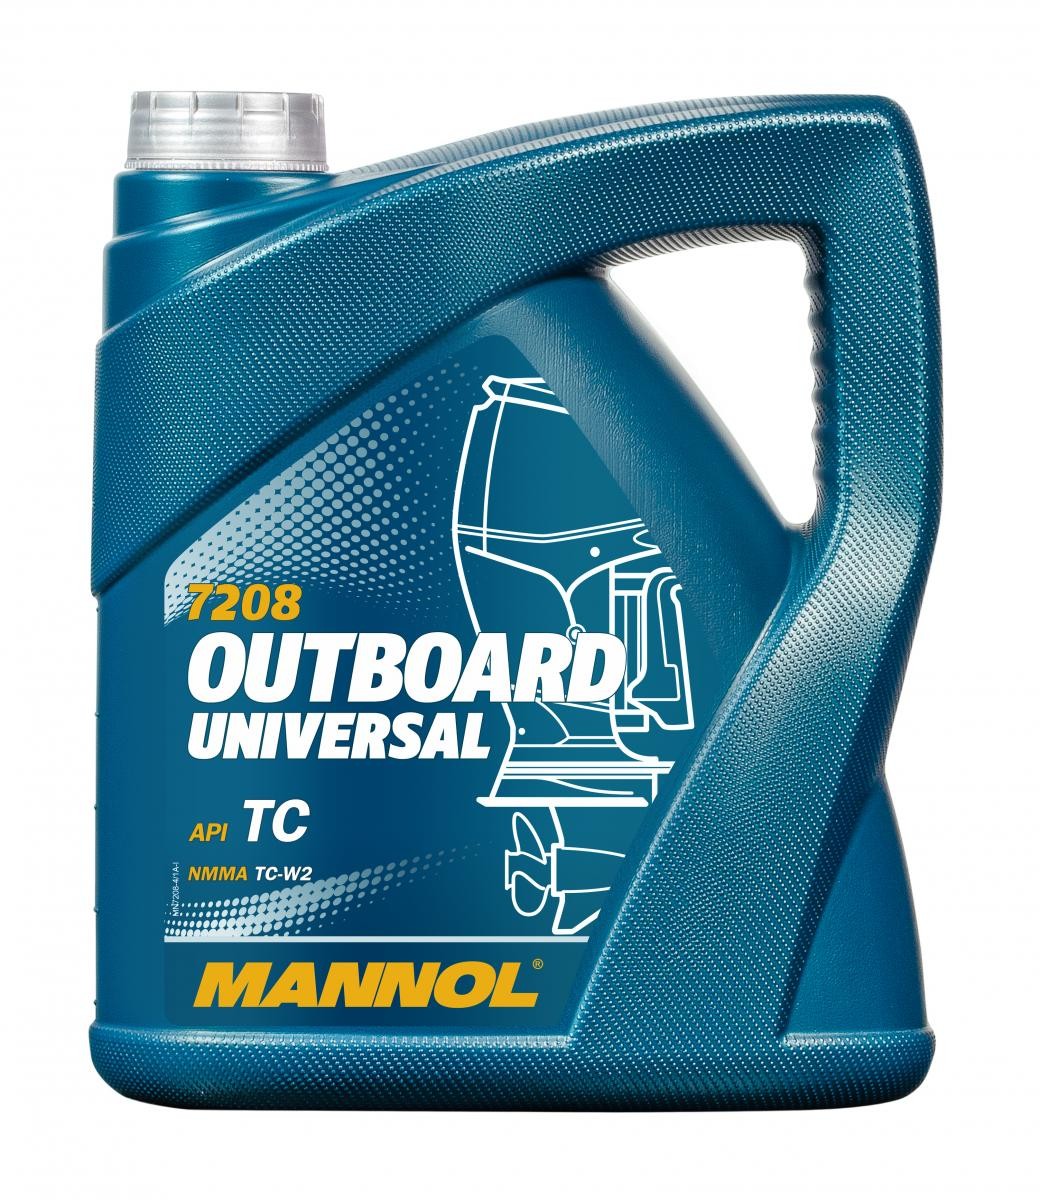 Motor oil API TC MANNOL - MN7208-4 Outboard, Universal